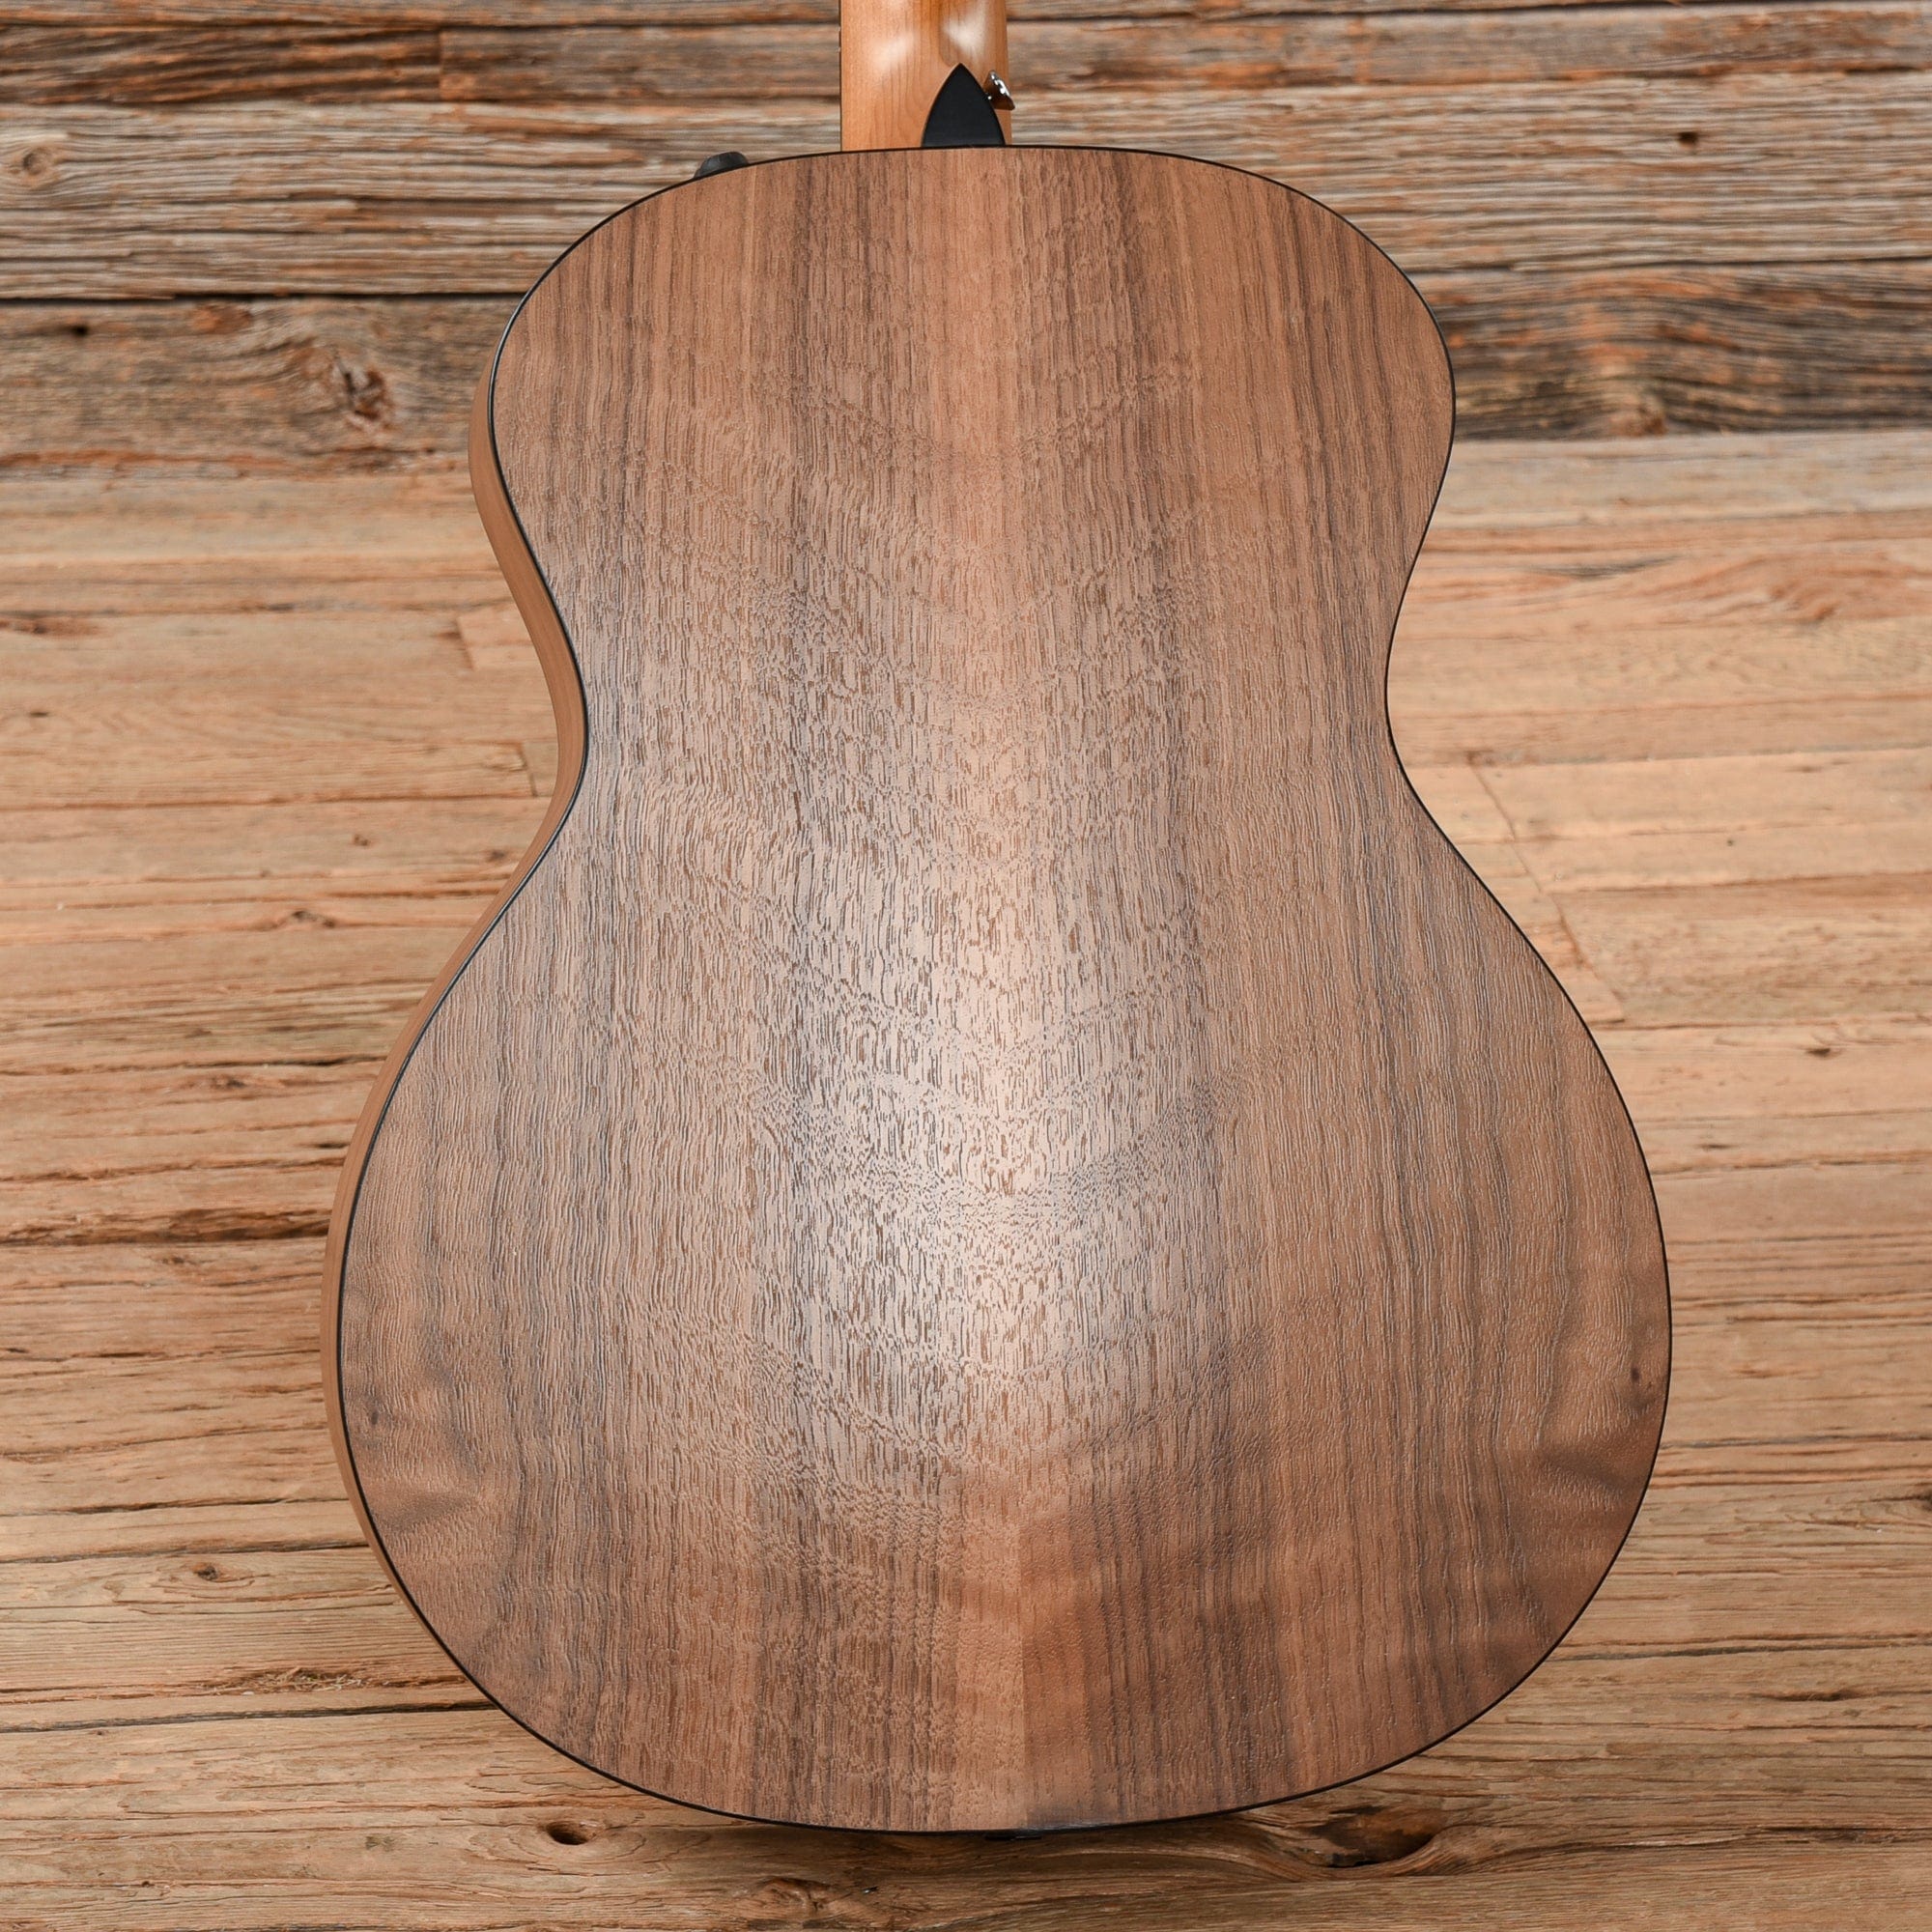 Taylor 114e Natural 2022 LEFTY Acoustic Guitars / Left-Handed